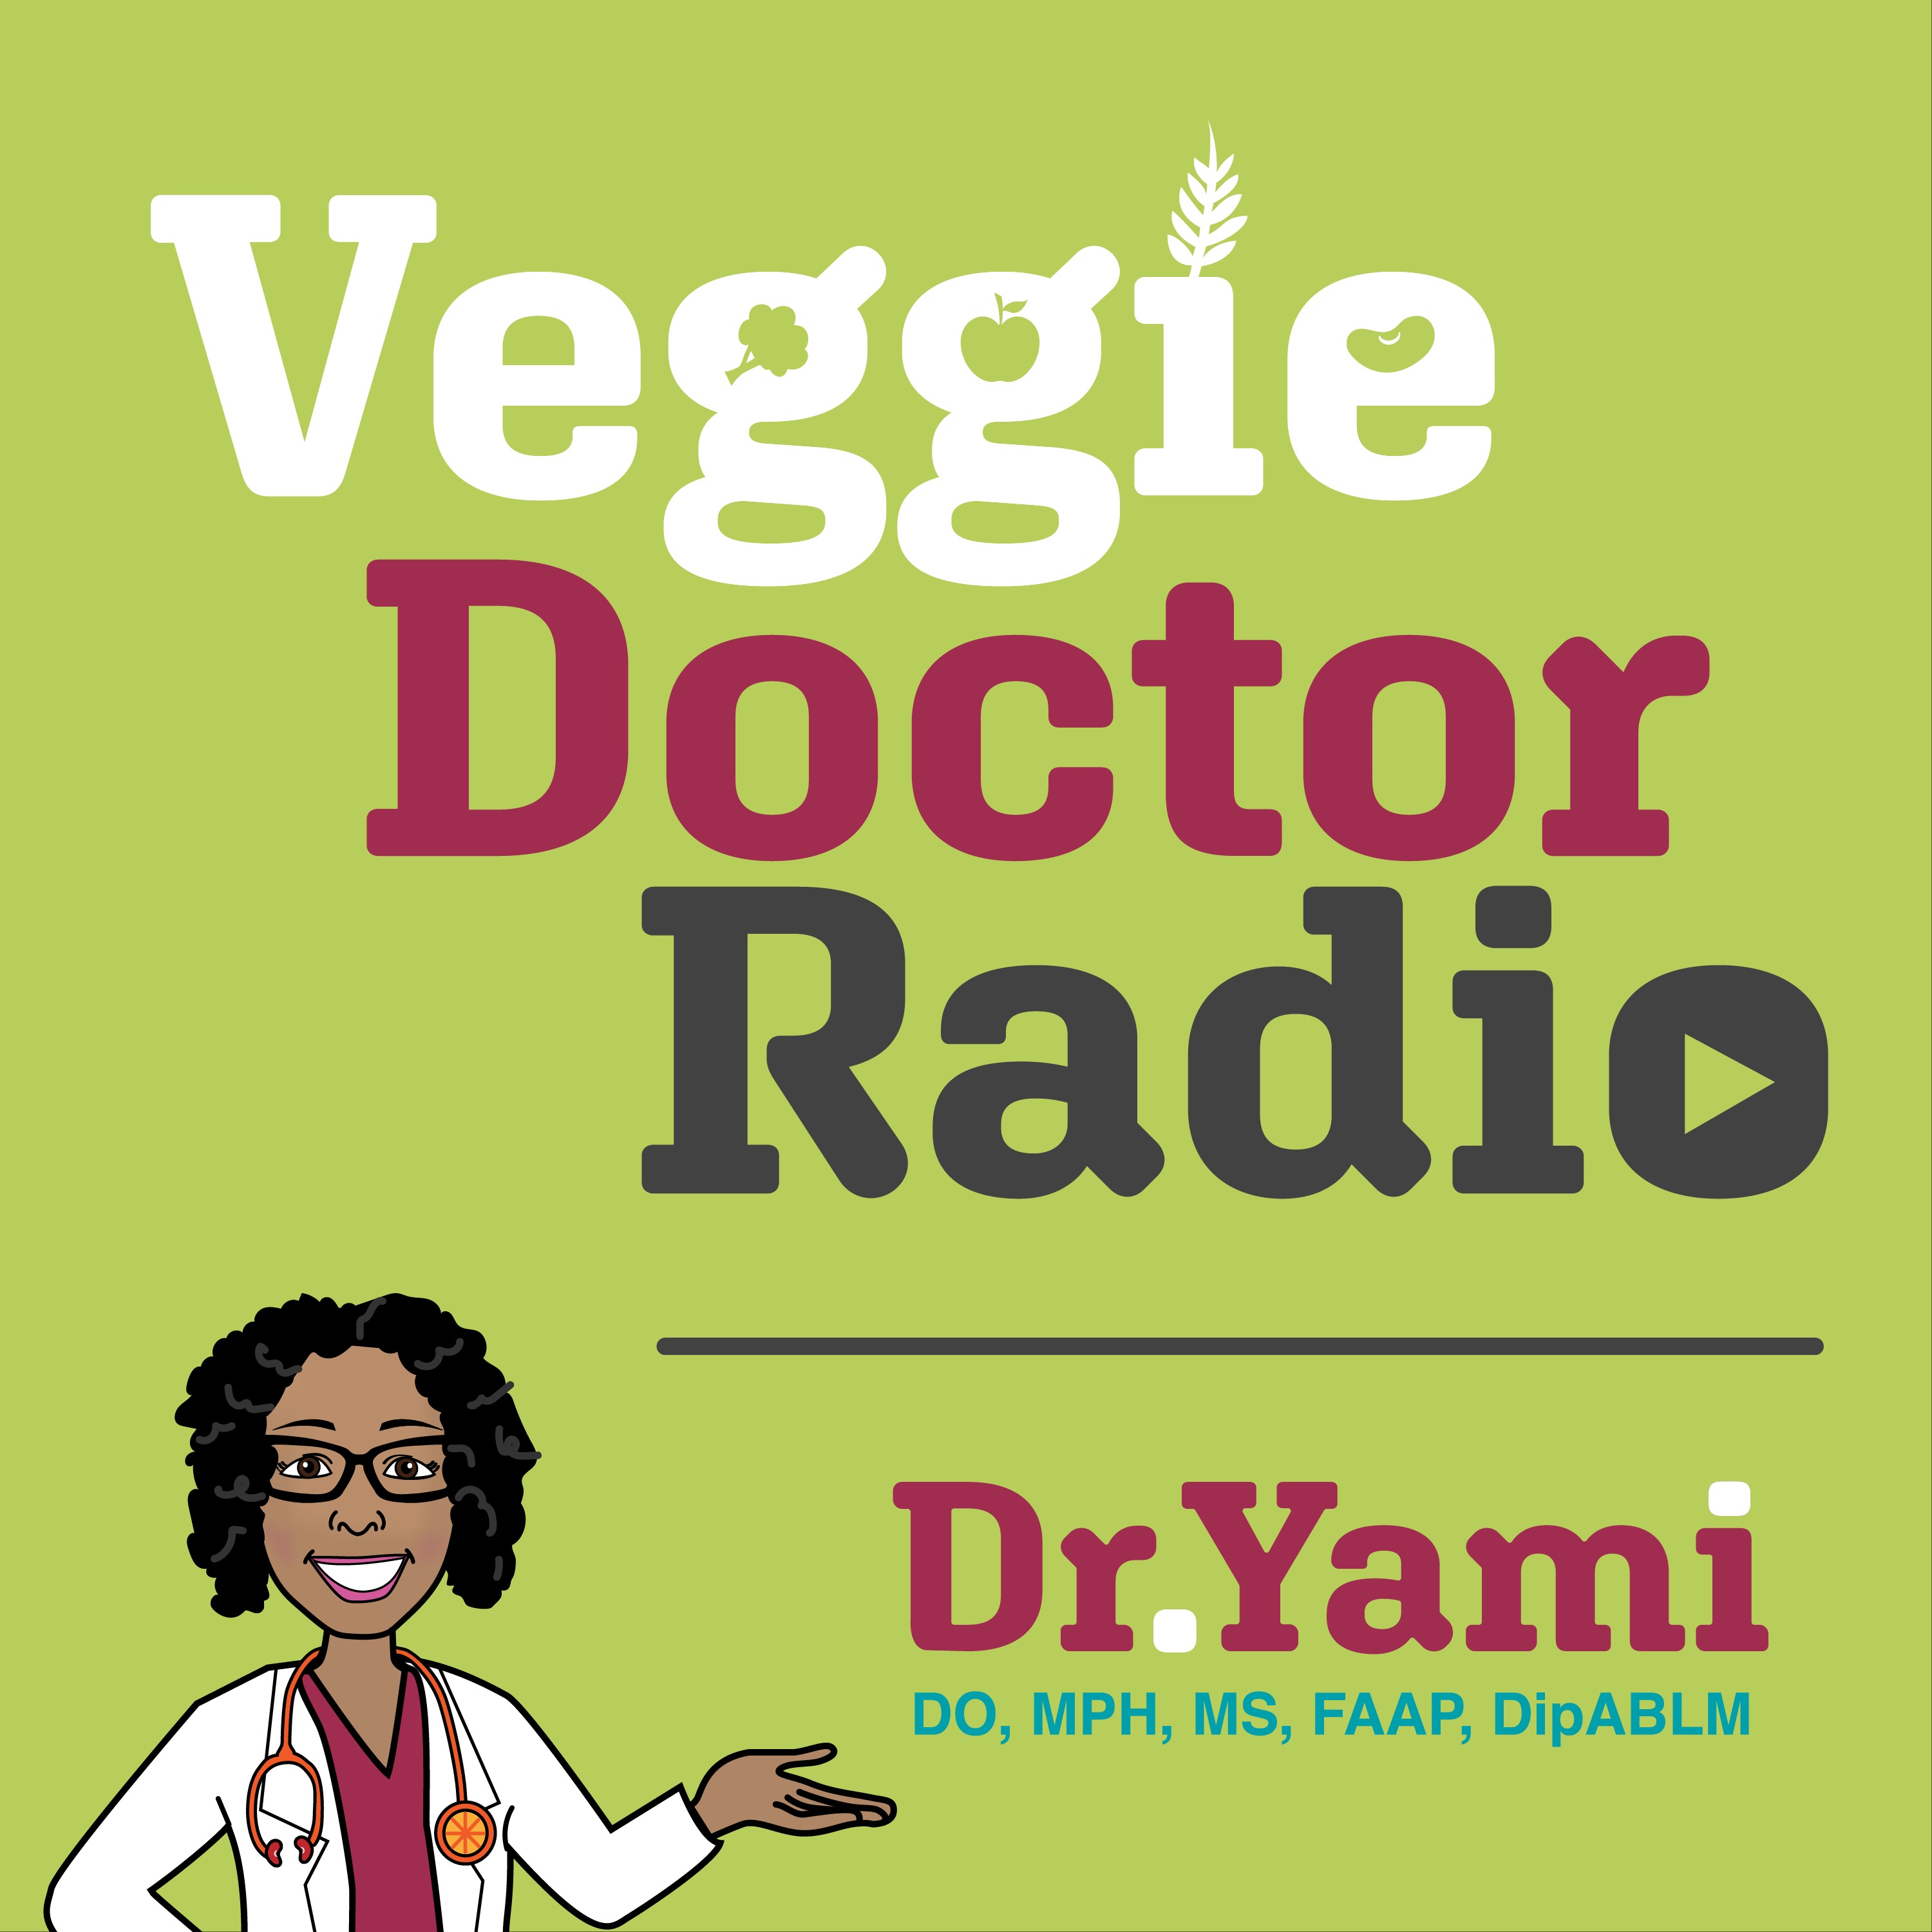 289: The Amazing Power of Sprouts with Doug Evans (Veggie Doctor Radio)